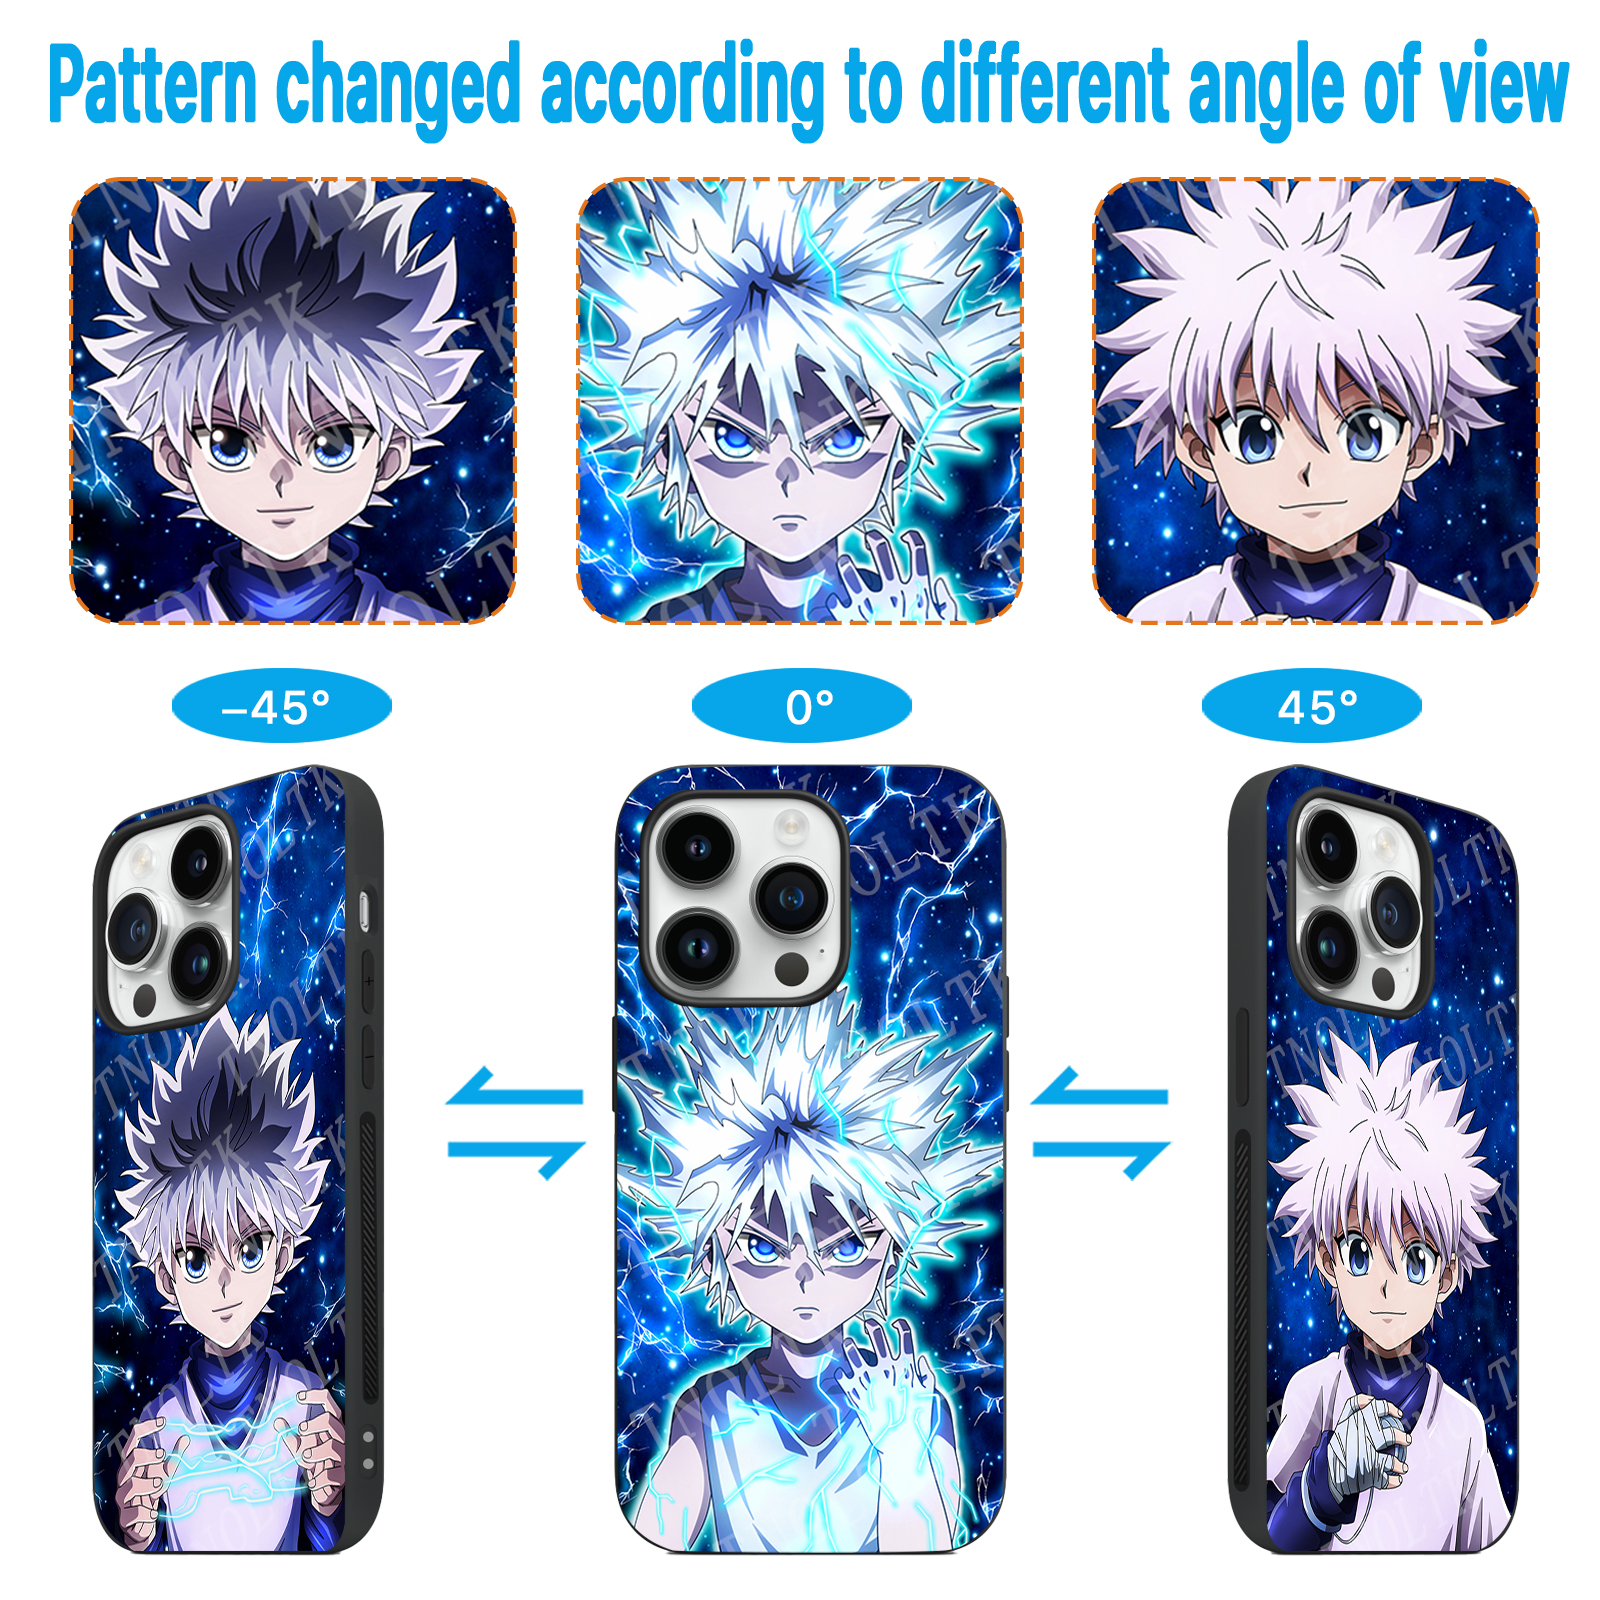 3D Motion iPhone Hunter x Hunter Anime Phone Cases